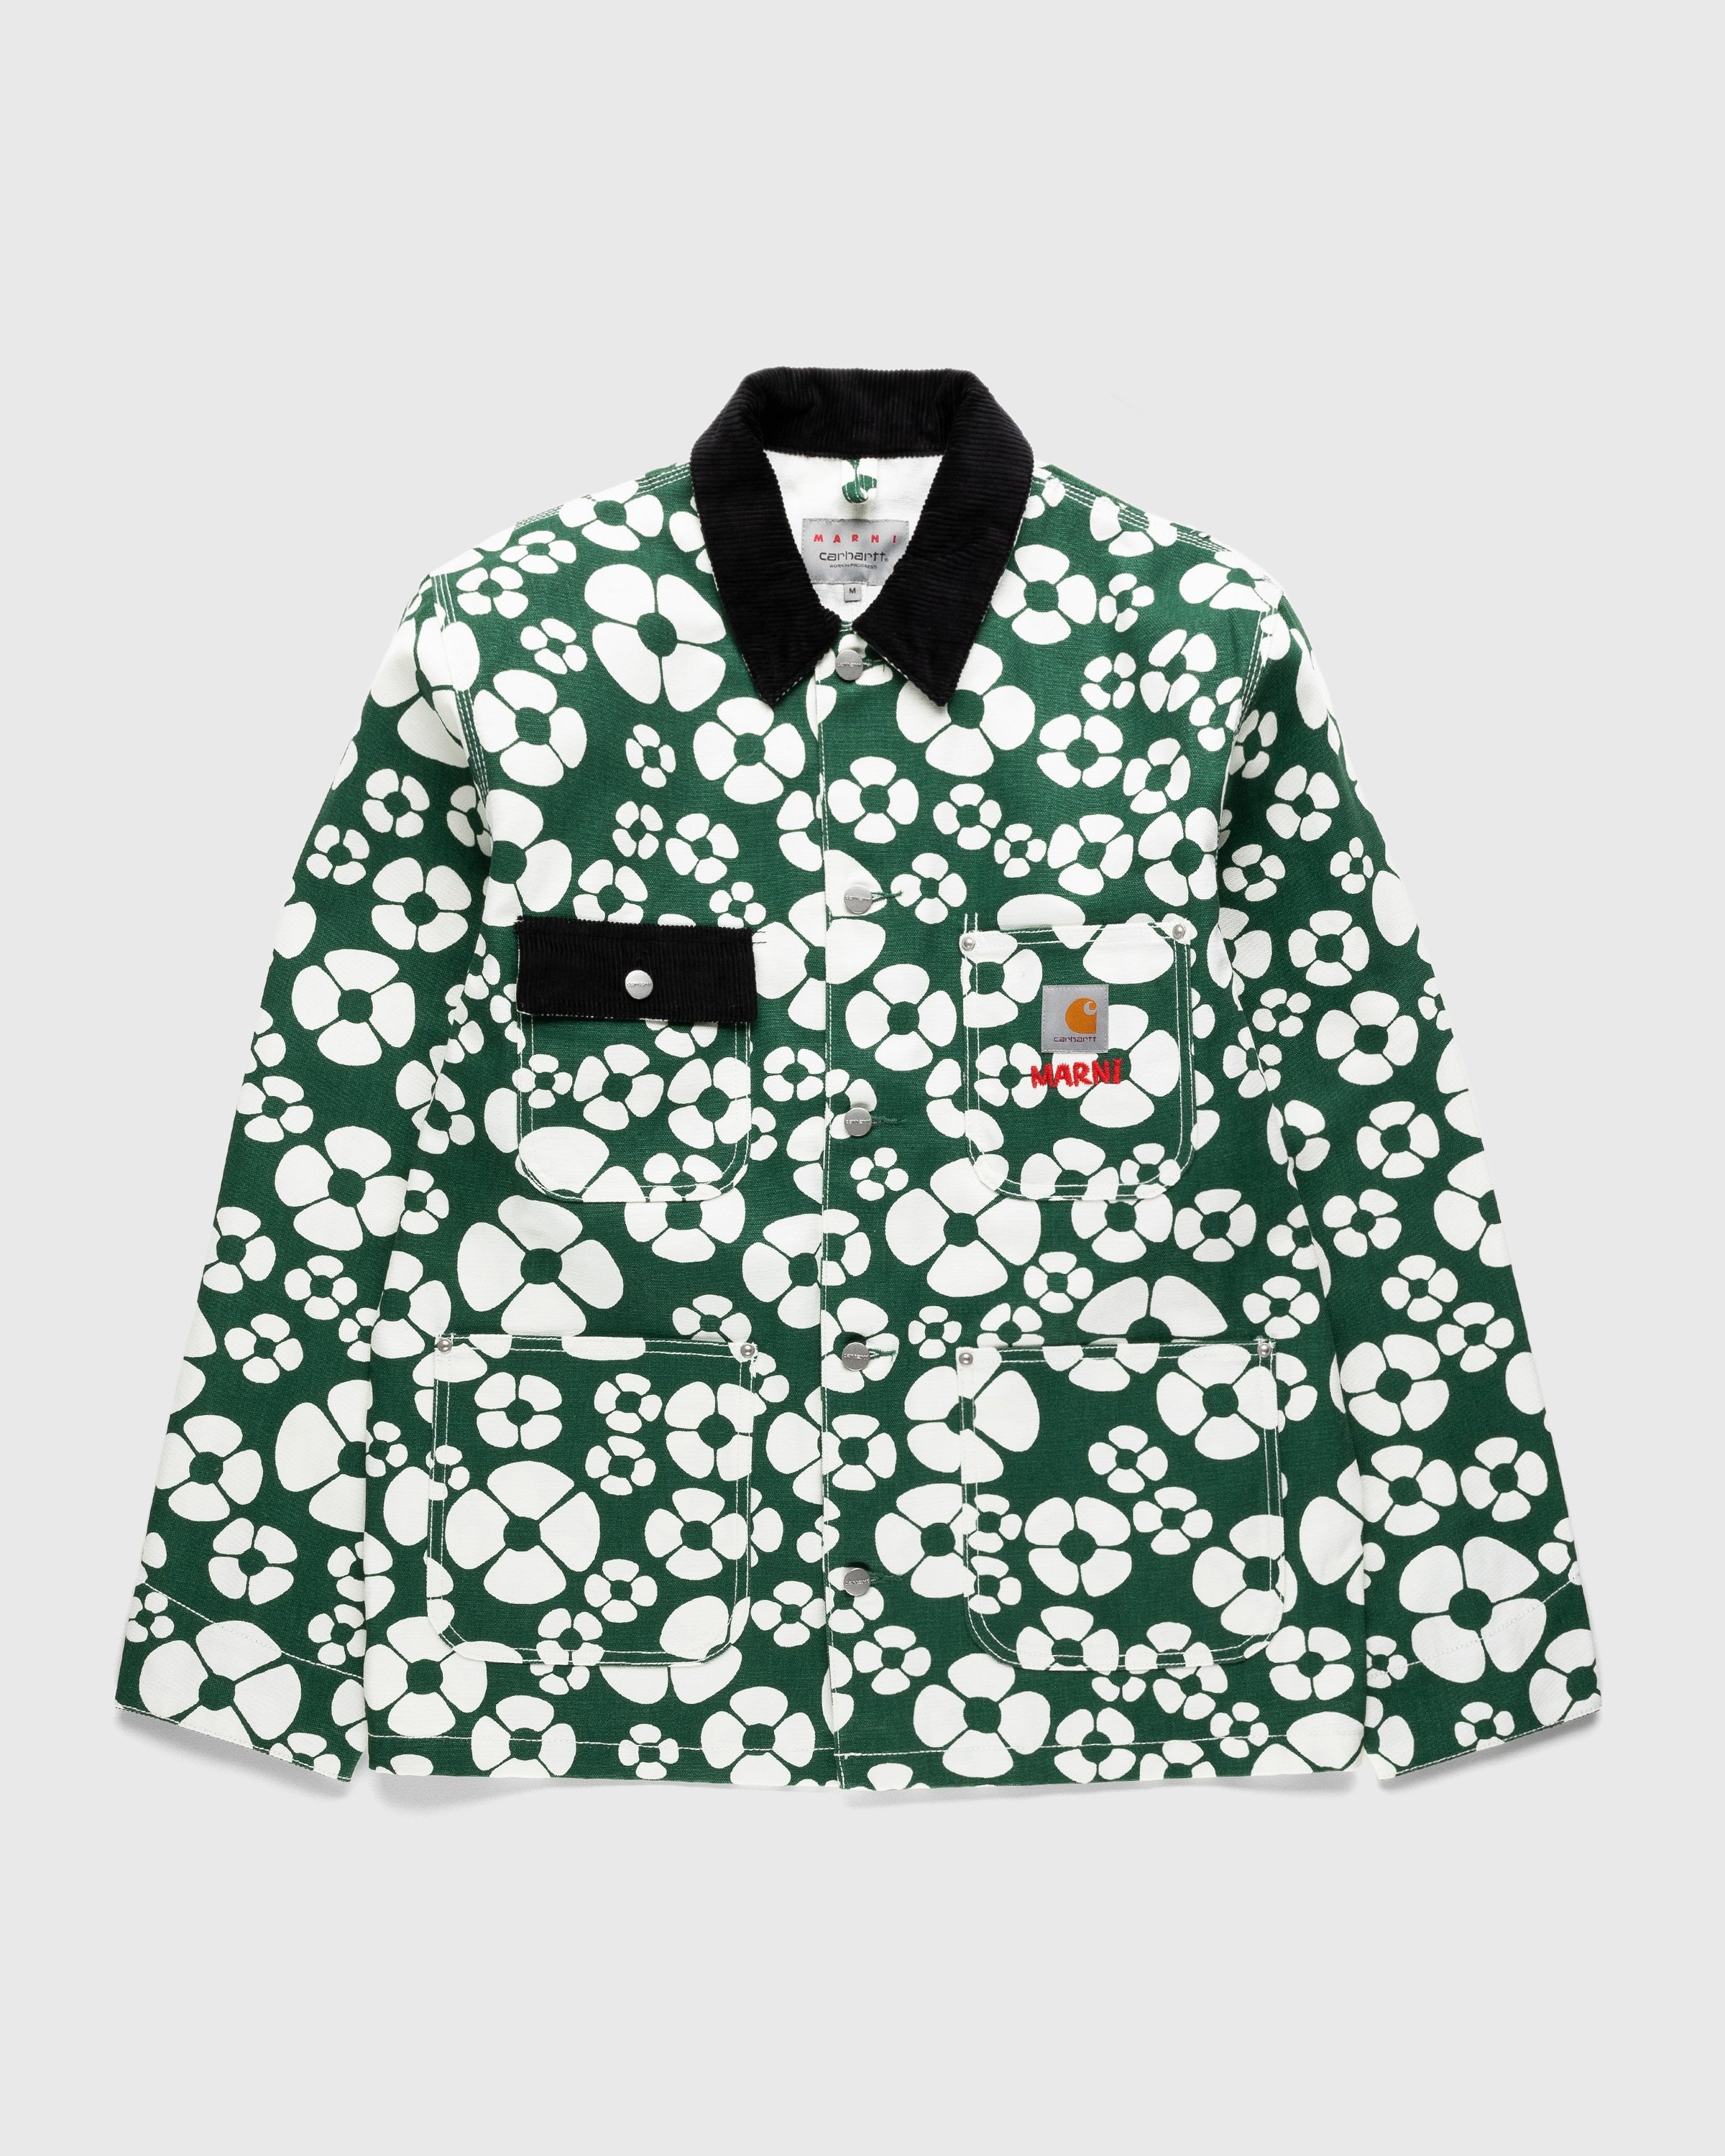 Marni x Carhartt WIP – Floral Jacket Green